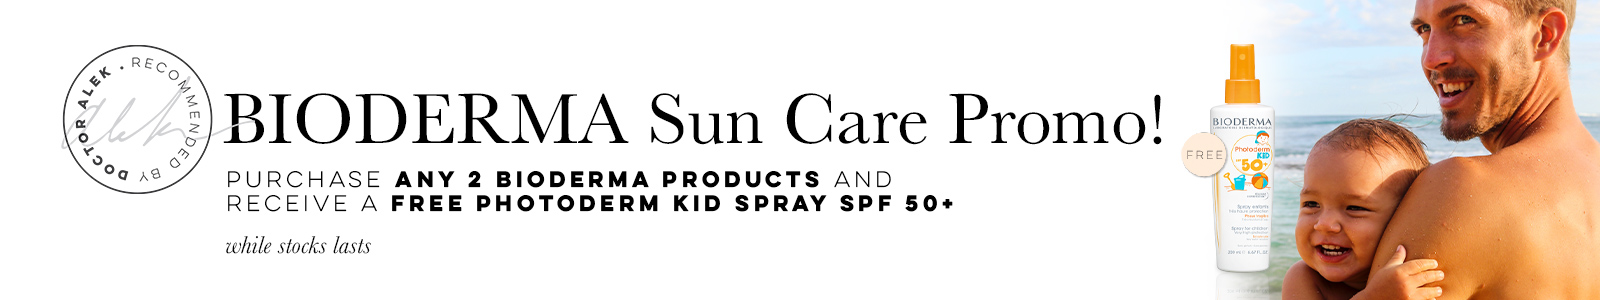 Bioderma-Sun-Care-Promotion-Website-Banner